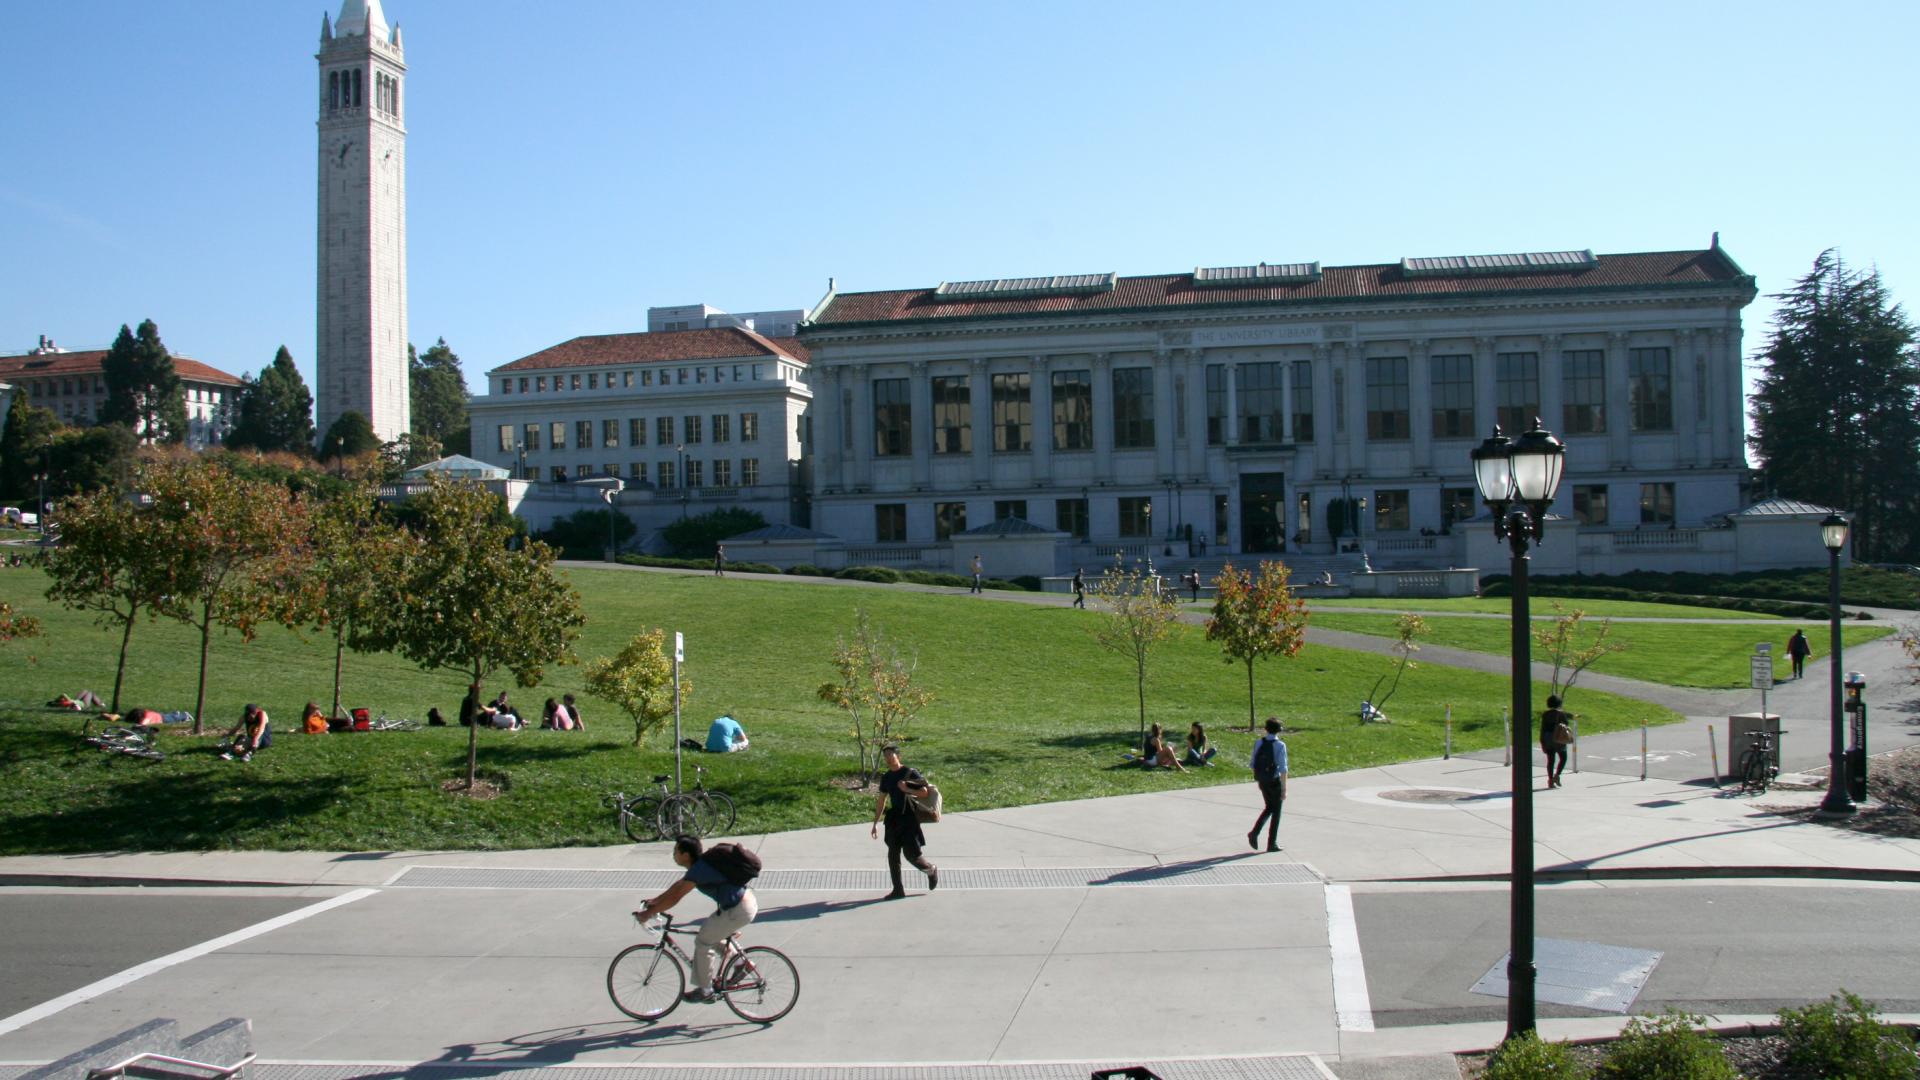 UC Berkeley landscape in front of clock tower